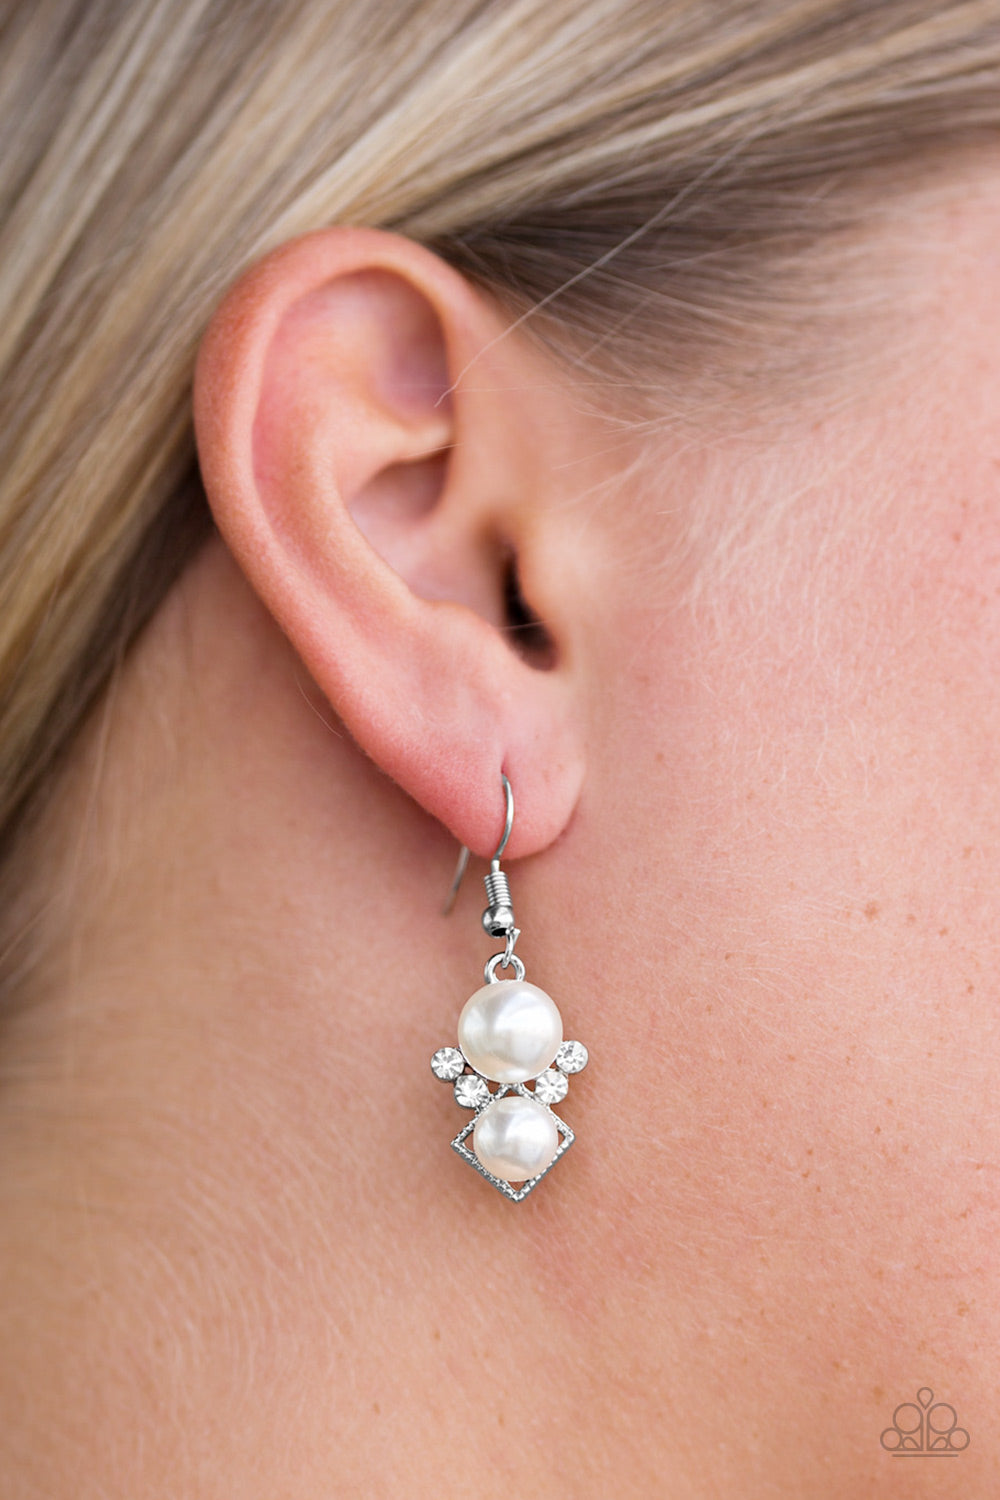 Paparazzi Mrs. Gatsby - White Pearls and Rhinestones - Earrings - $5 Jewelry With Ashley Swint